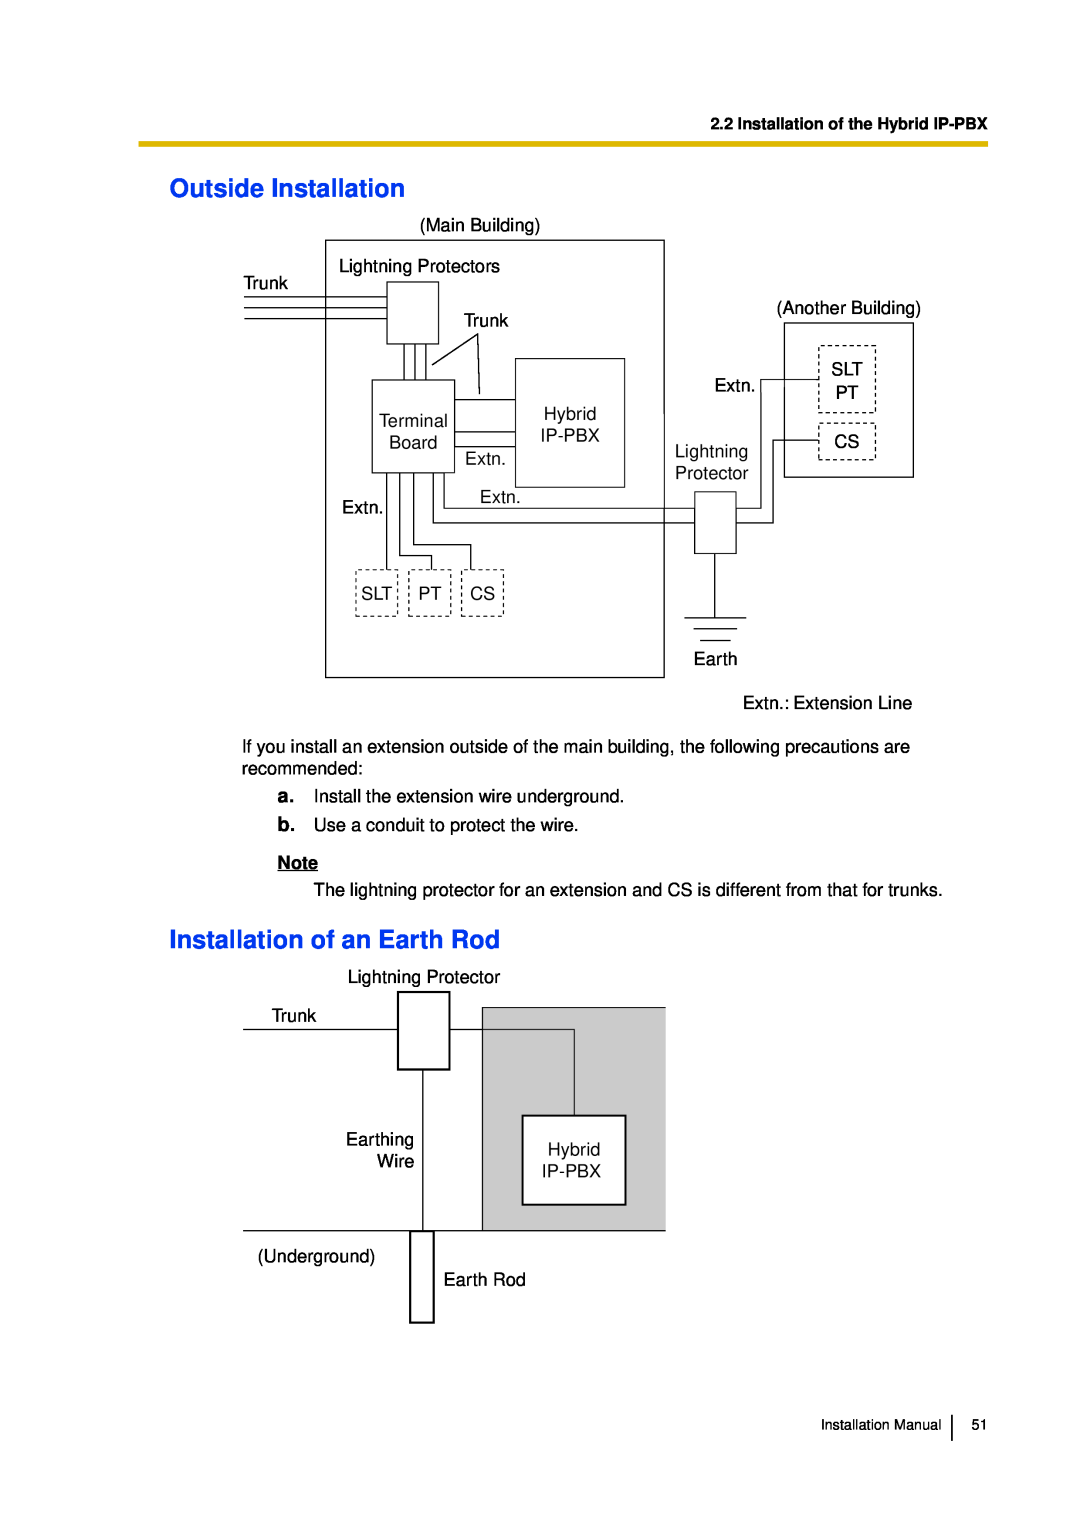 Panasonic KX-TDA30 installation manual Outside Installation, Installation of an Earth Rod 